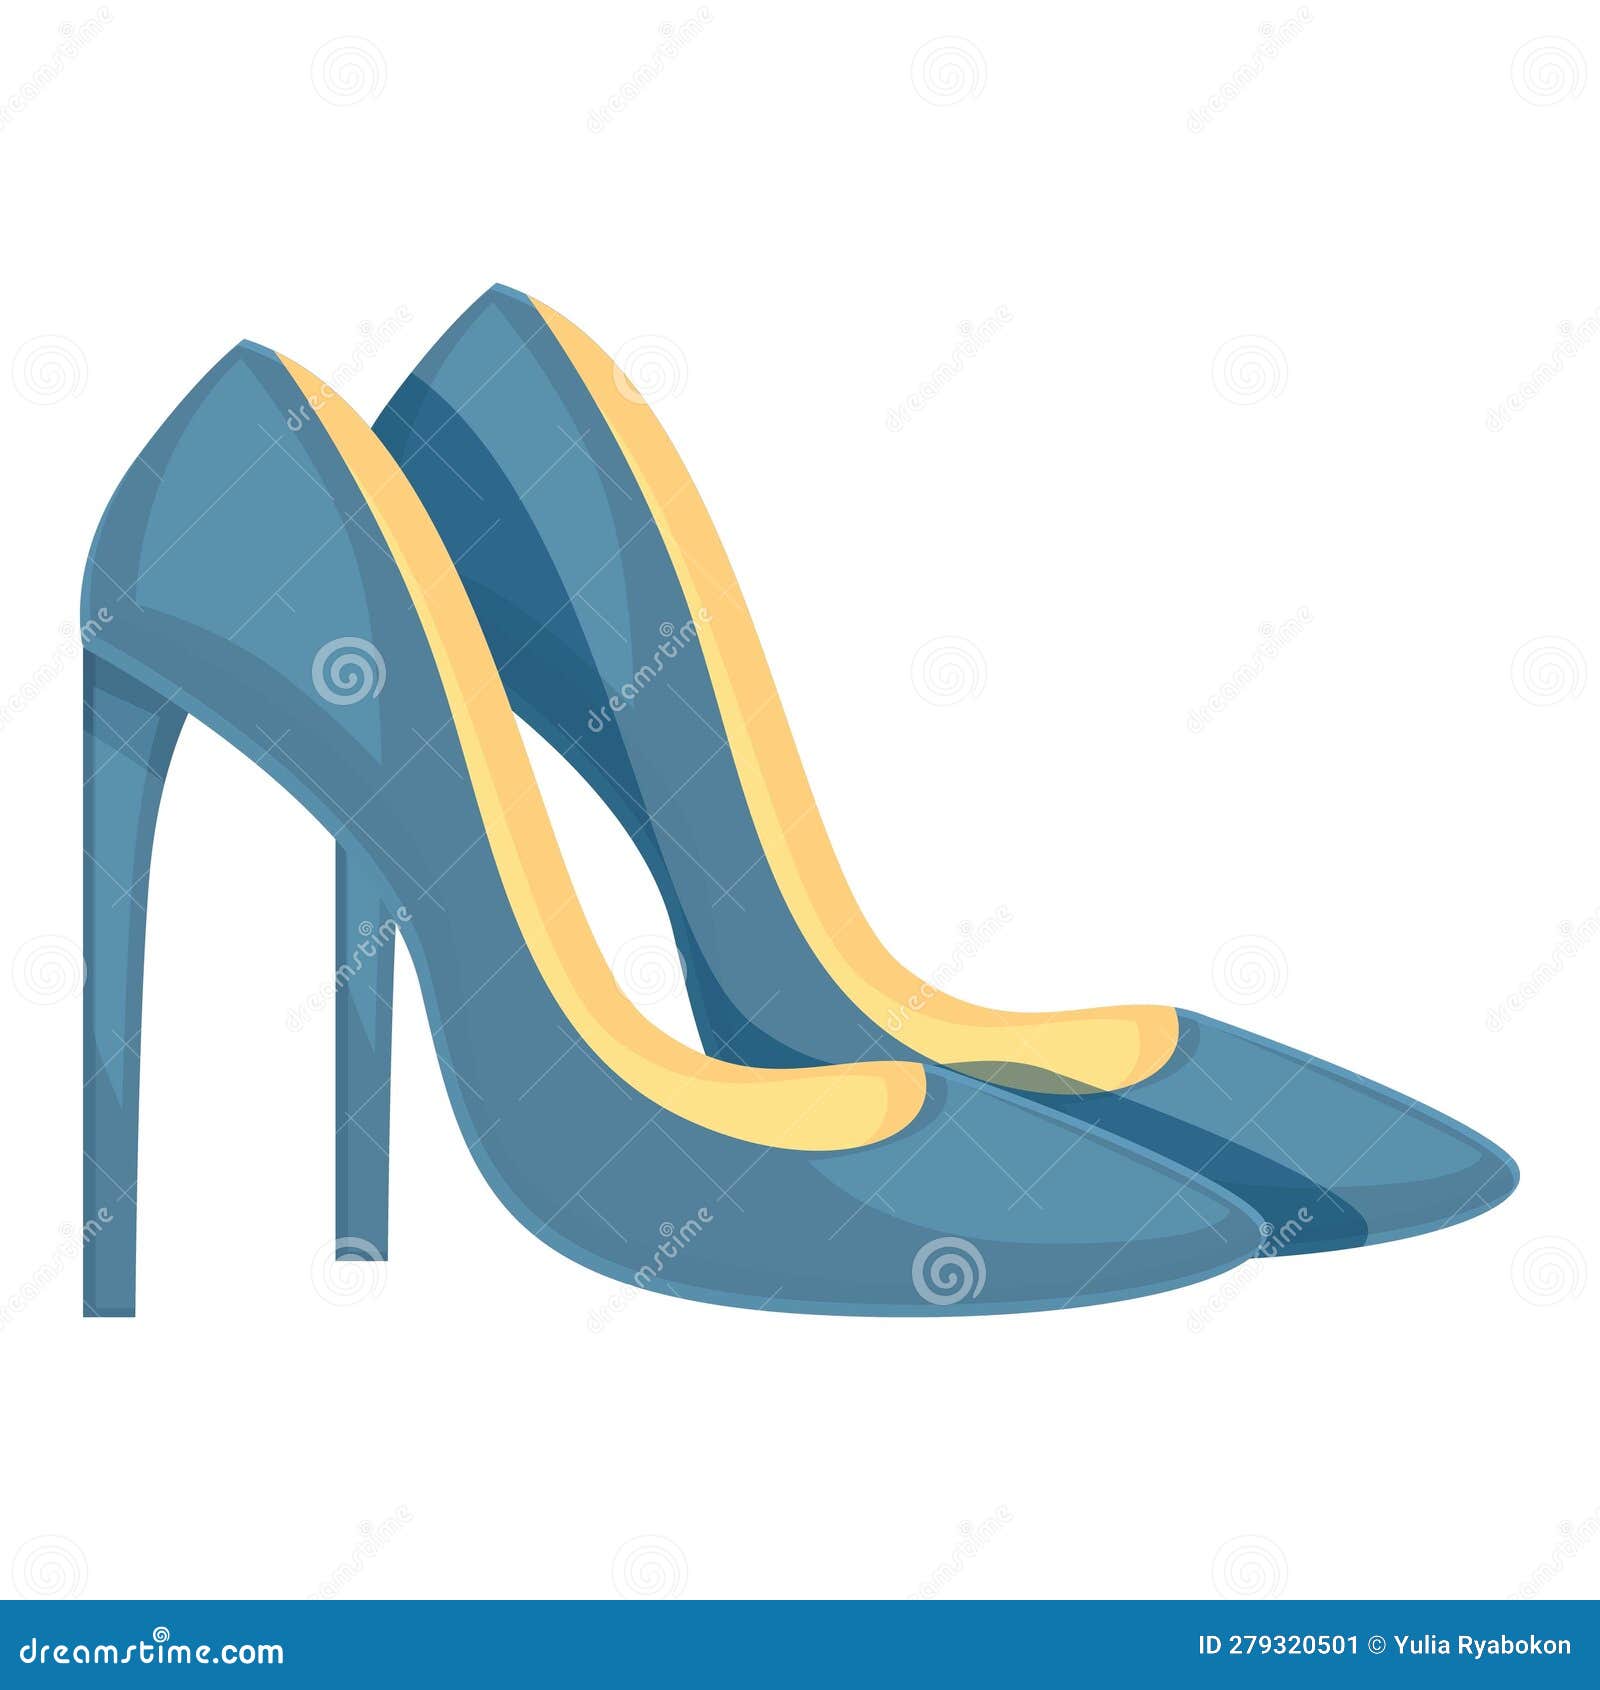 Premium AI Image | Cartoon illustration of high heel shoes